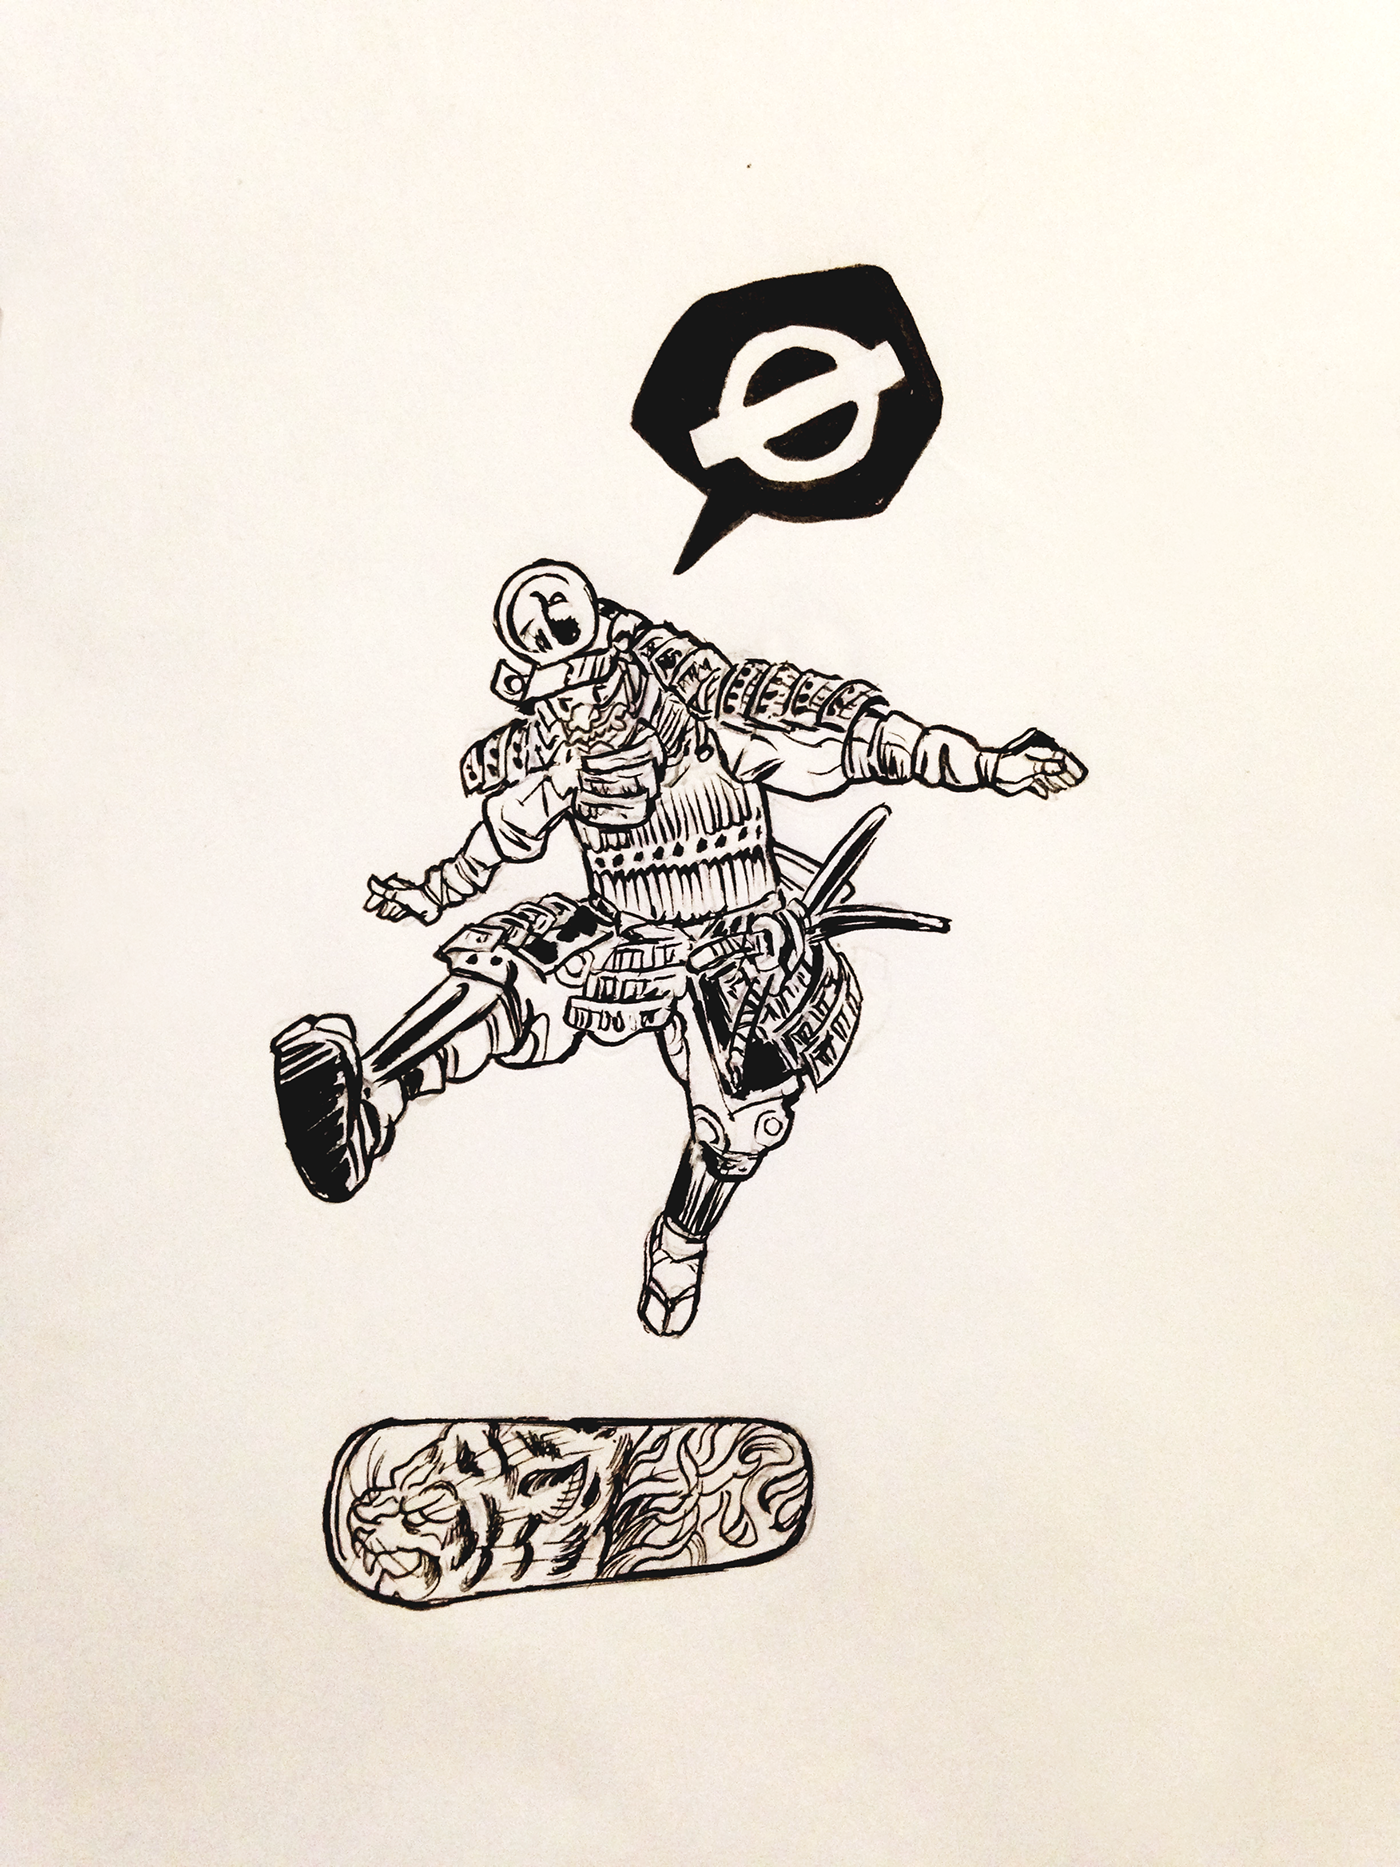 skate skateboarding samurai ink skate tricks ollie